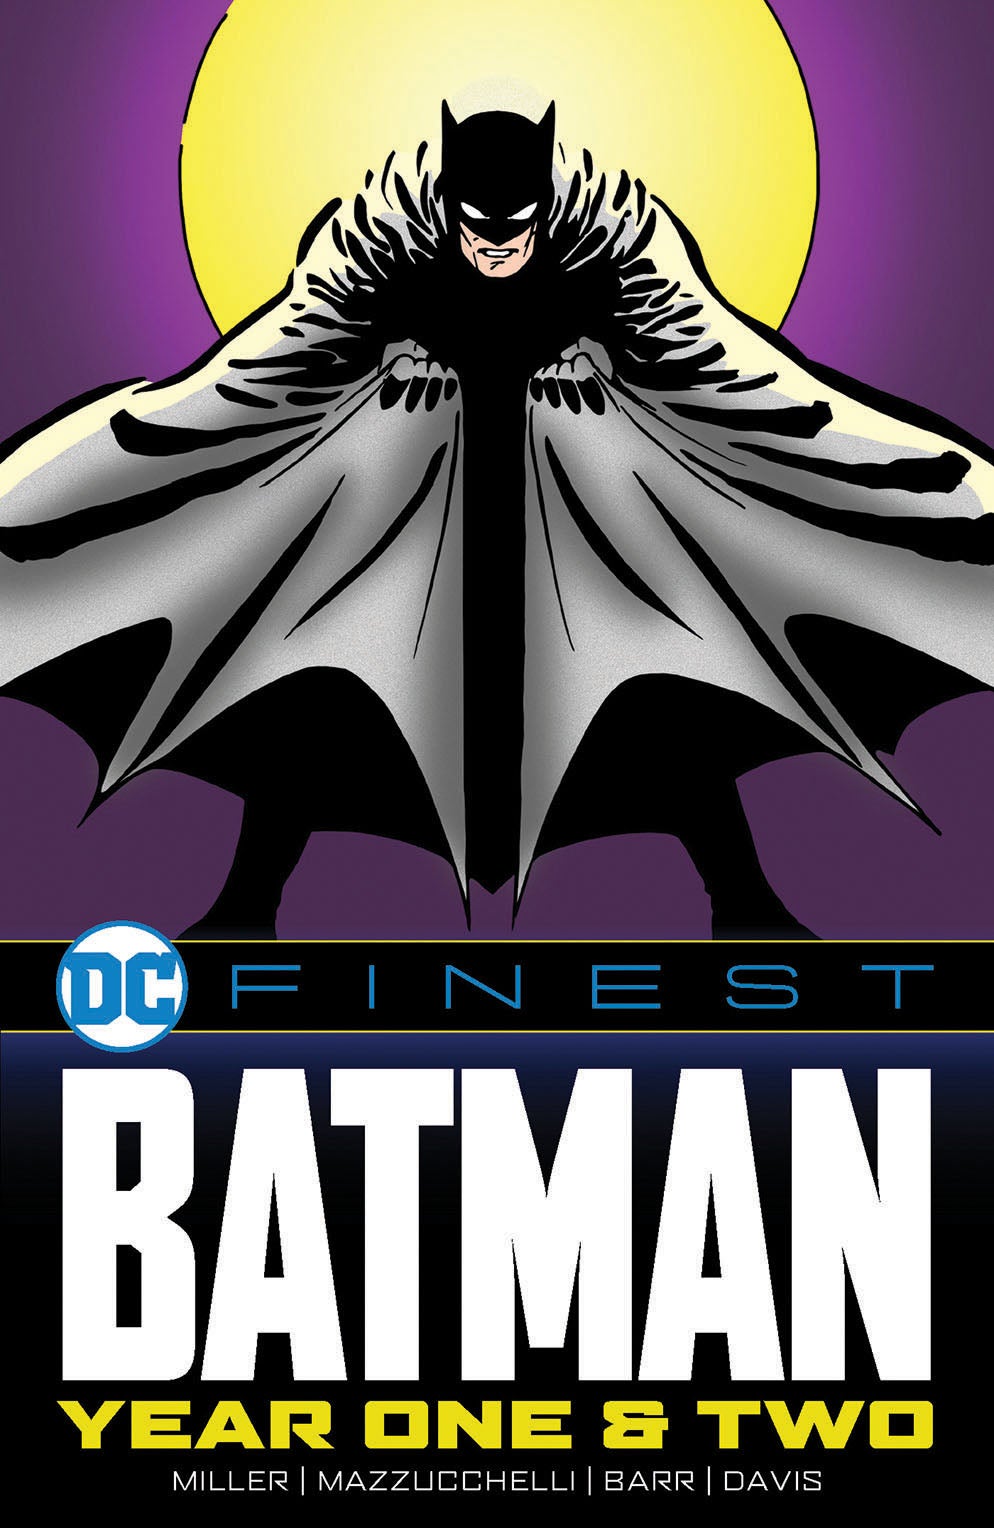 DC Finest: Batman Year One & Two